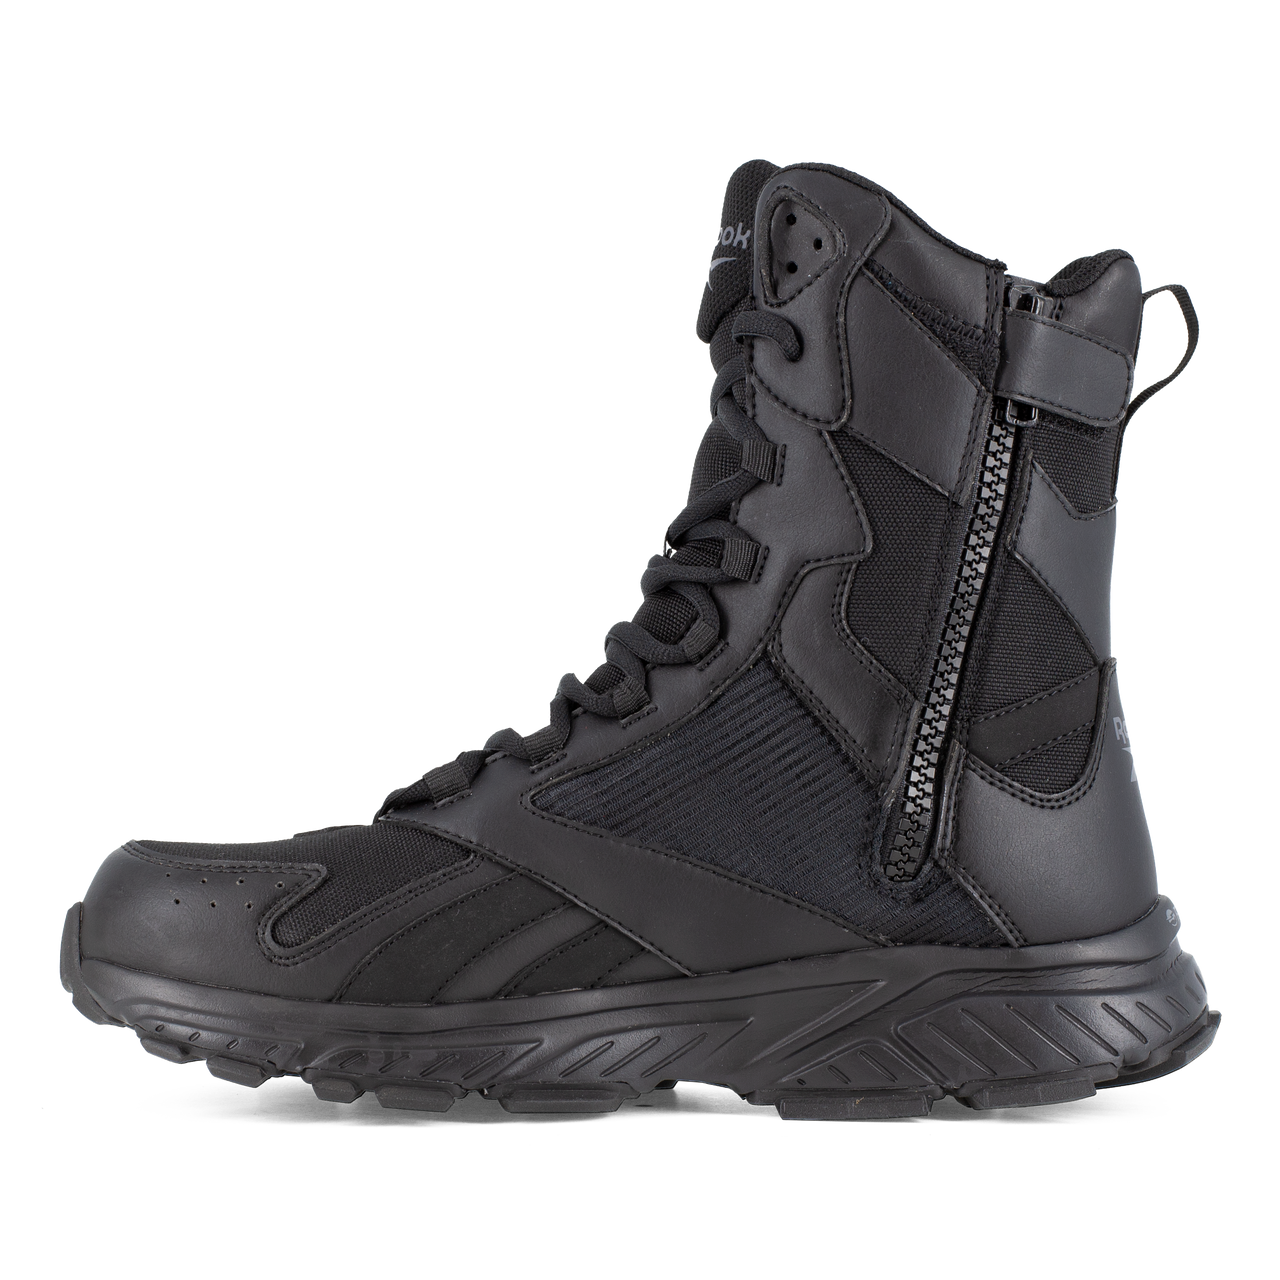 Reebok Tactical Hyperium Tactical 8" Men's Boot with Soft Toe - Black Tactical Gear Australia Supplier Distributor Dealer